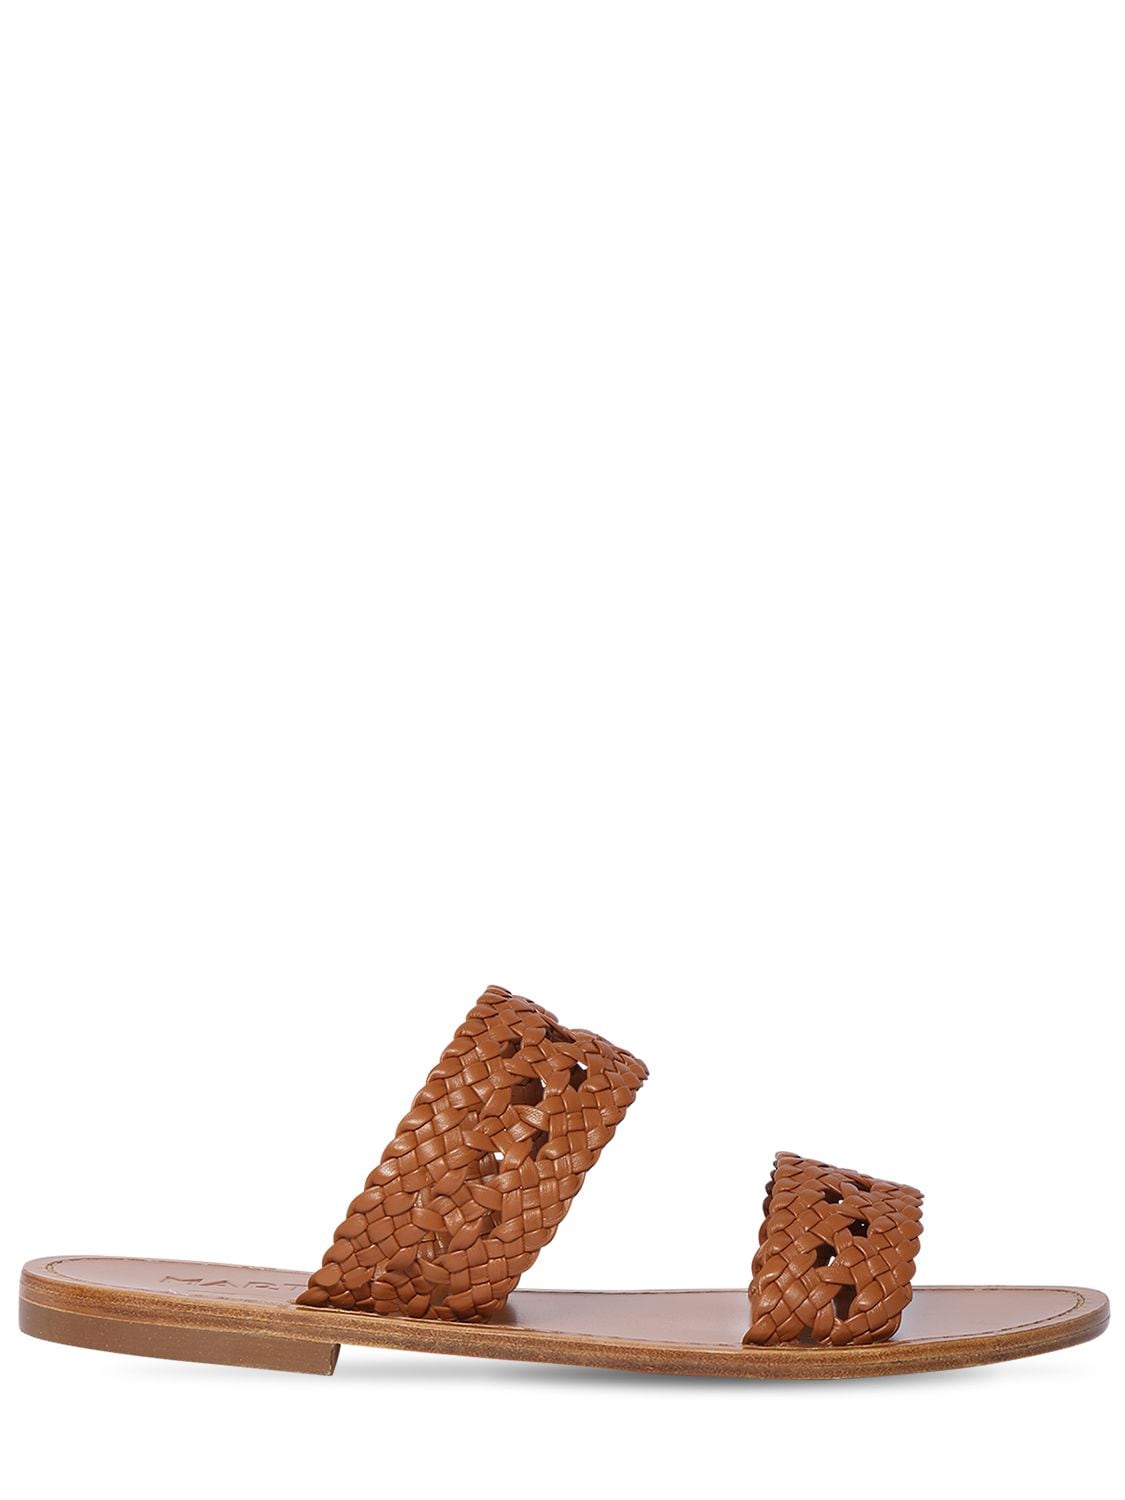 Mm Woven Leather Flat Sandals - SOULIERS MARTINEZ - Modalova